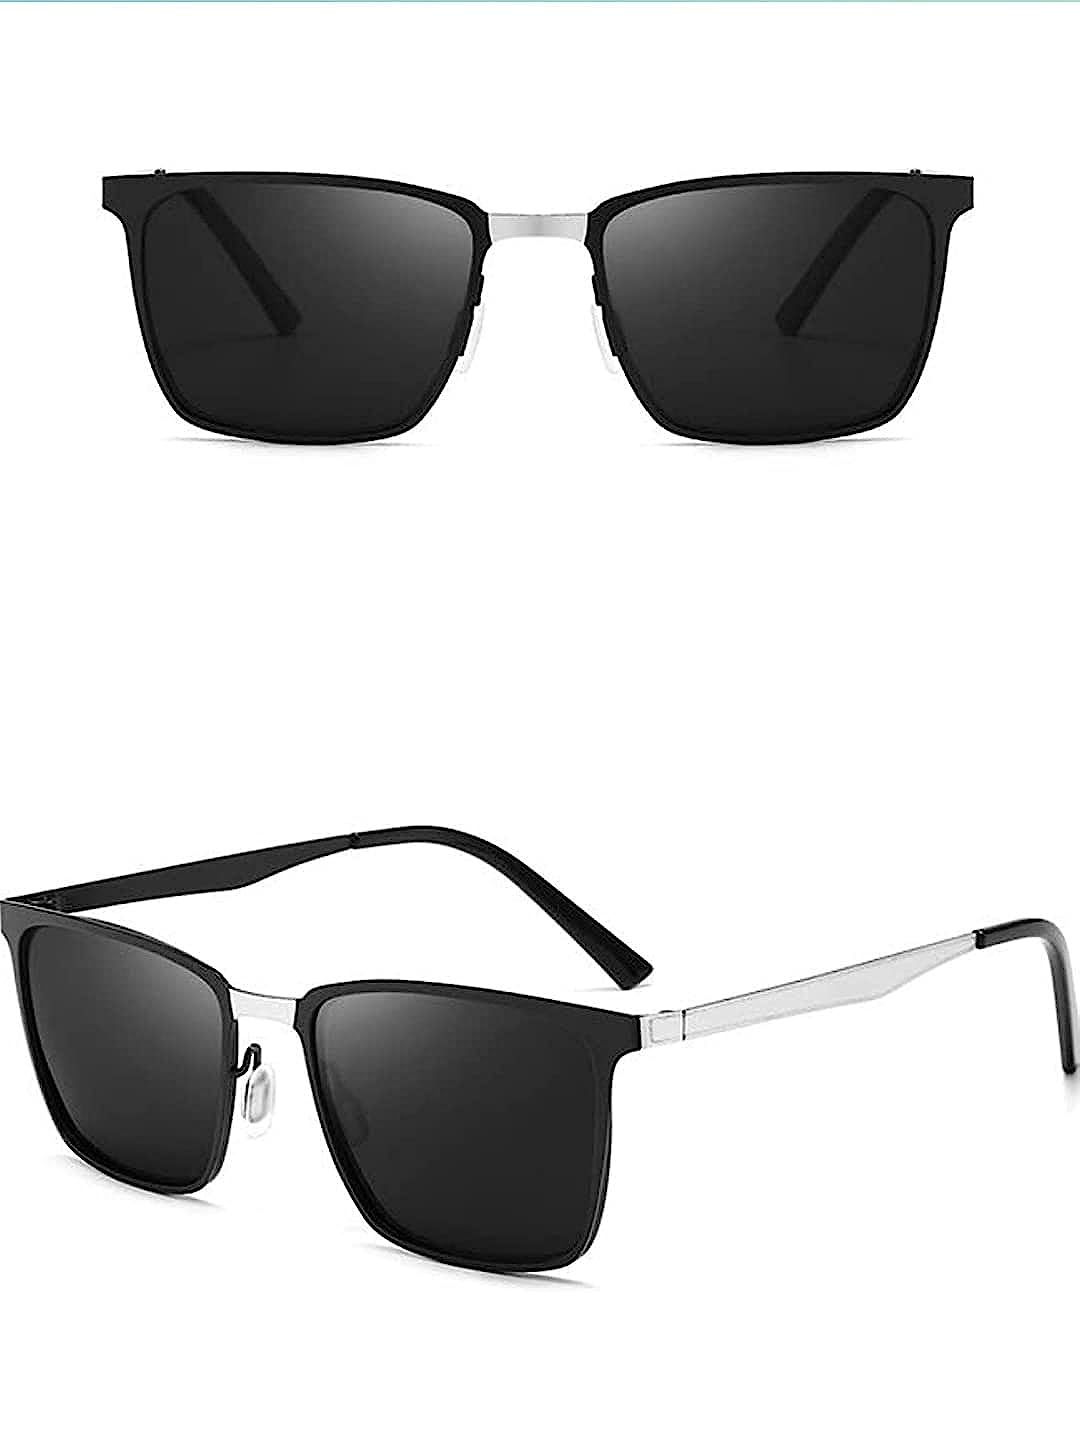 Polarized Wayfarer Premium Black Metal Sunglasses || PW002HVR